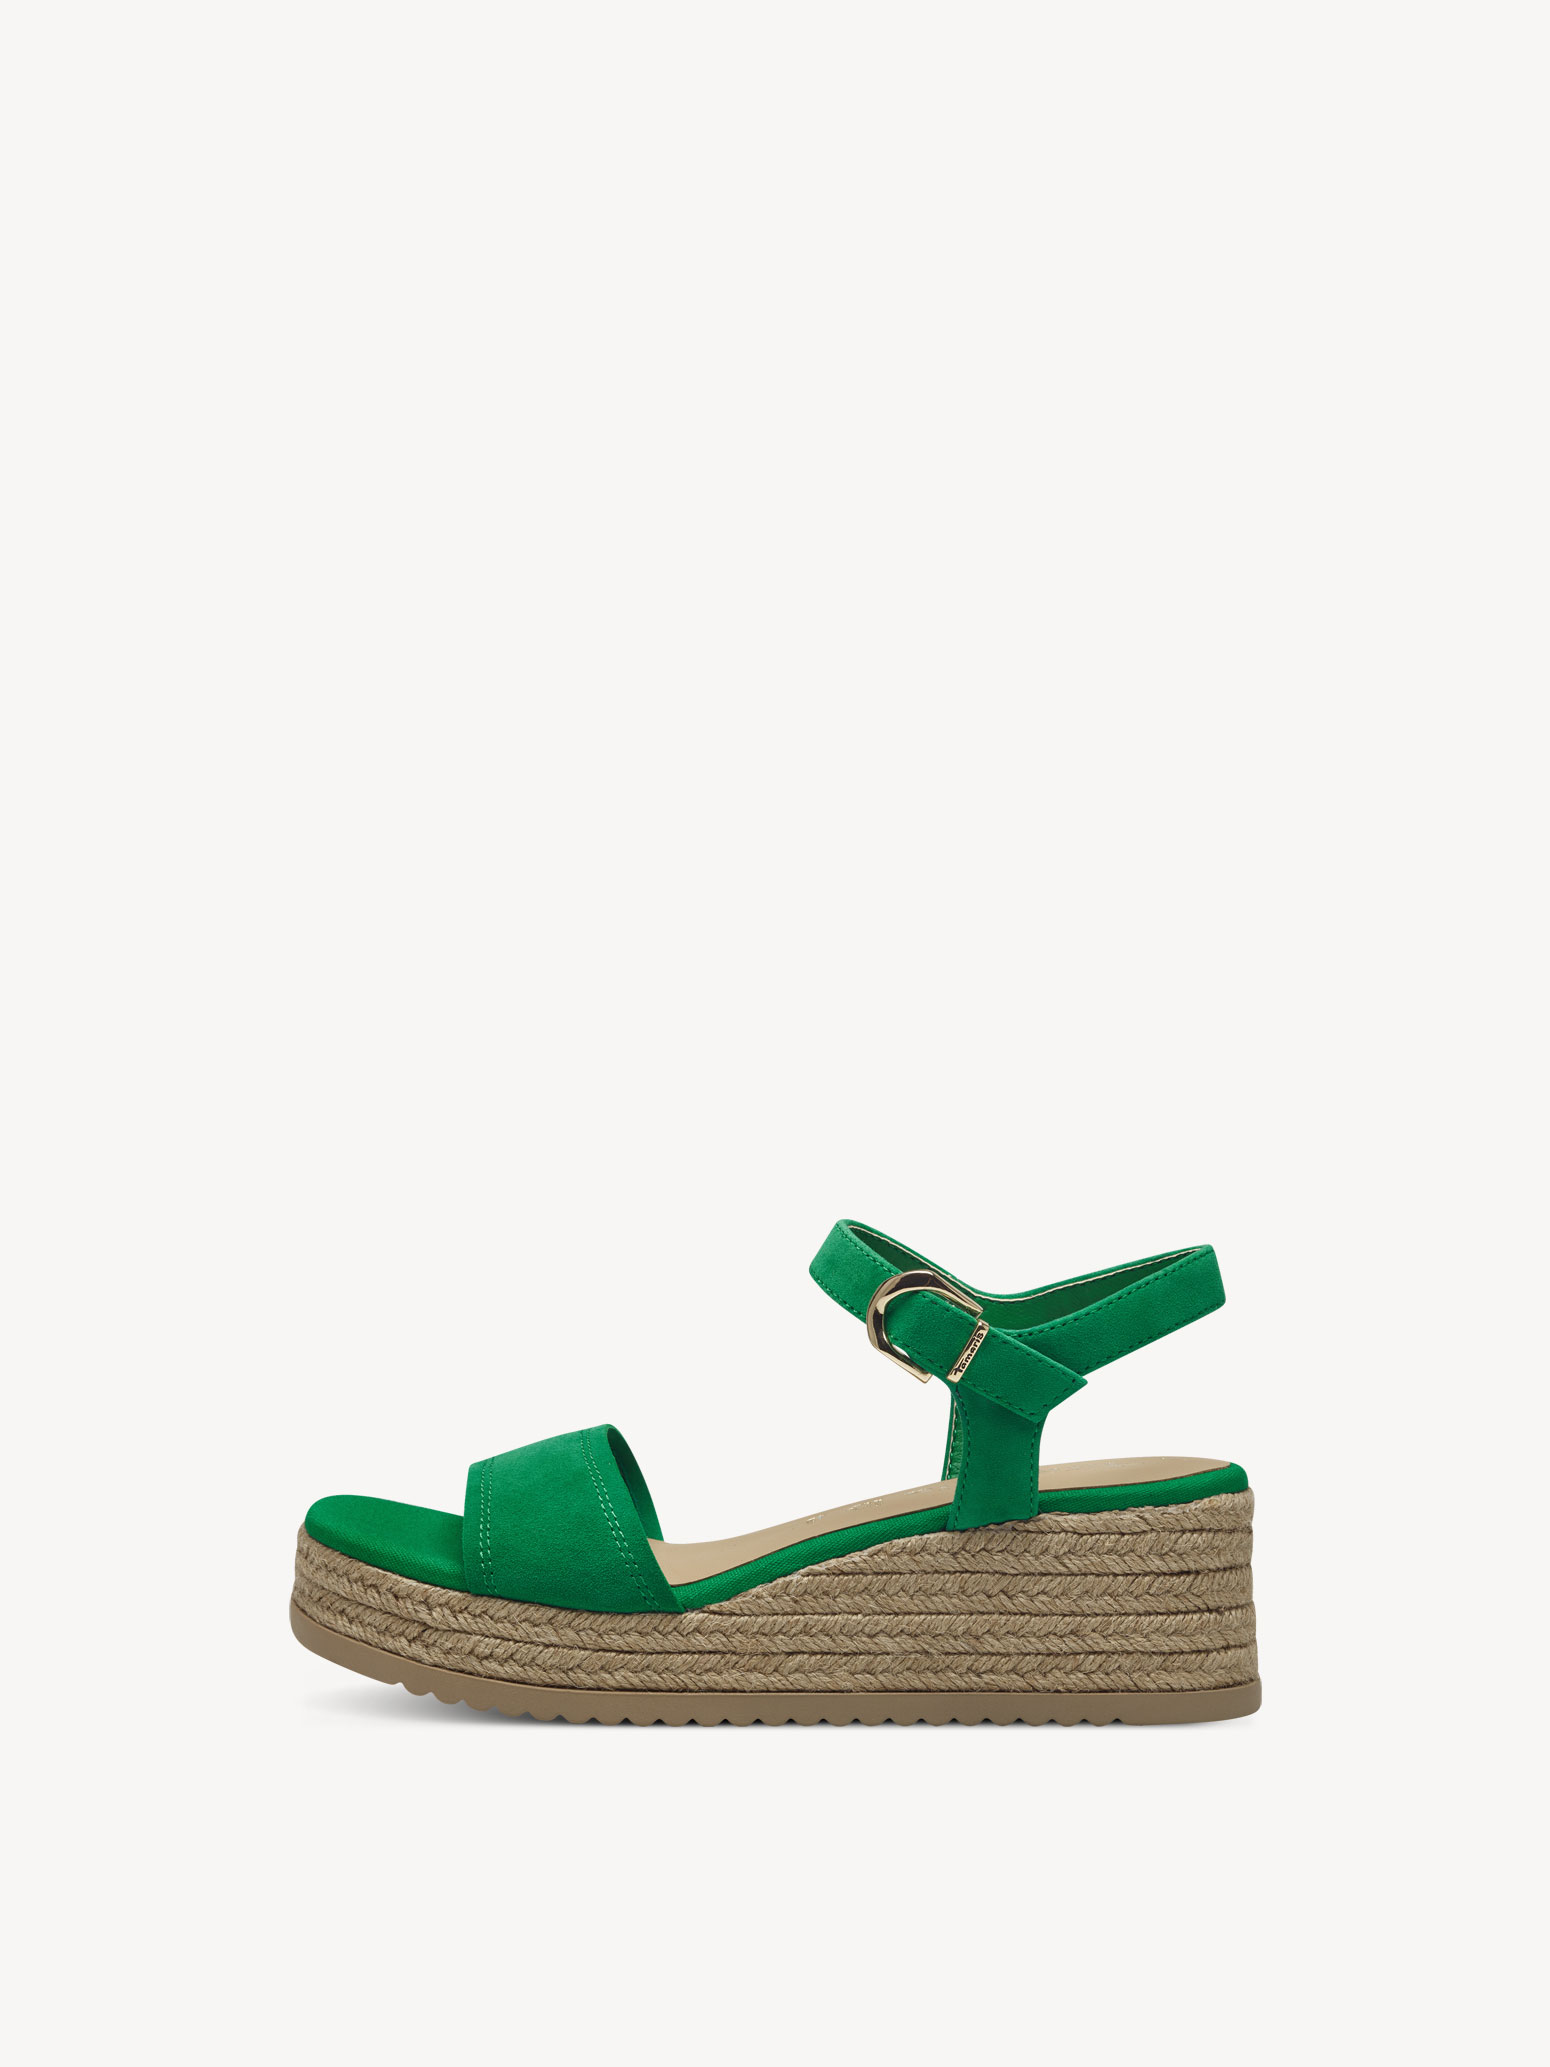 Sandalette grün Gr. 41